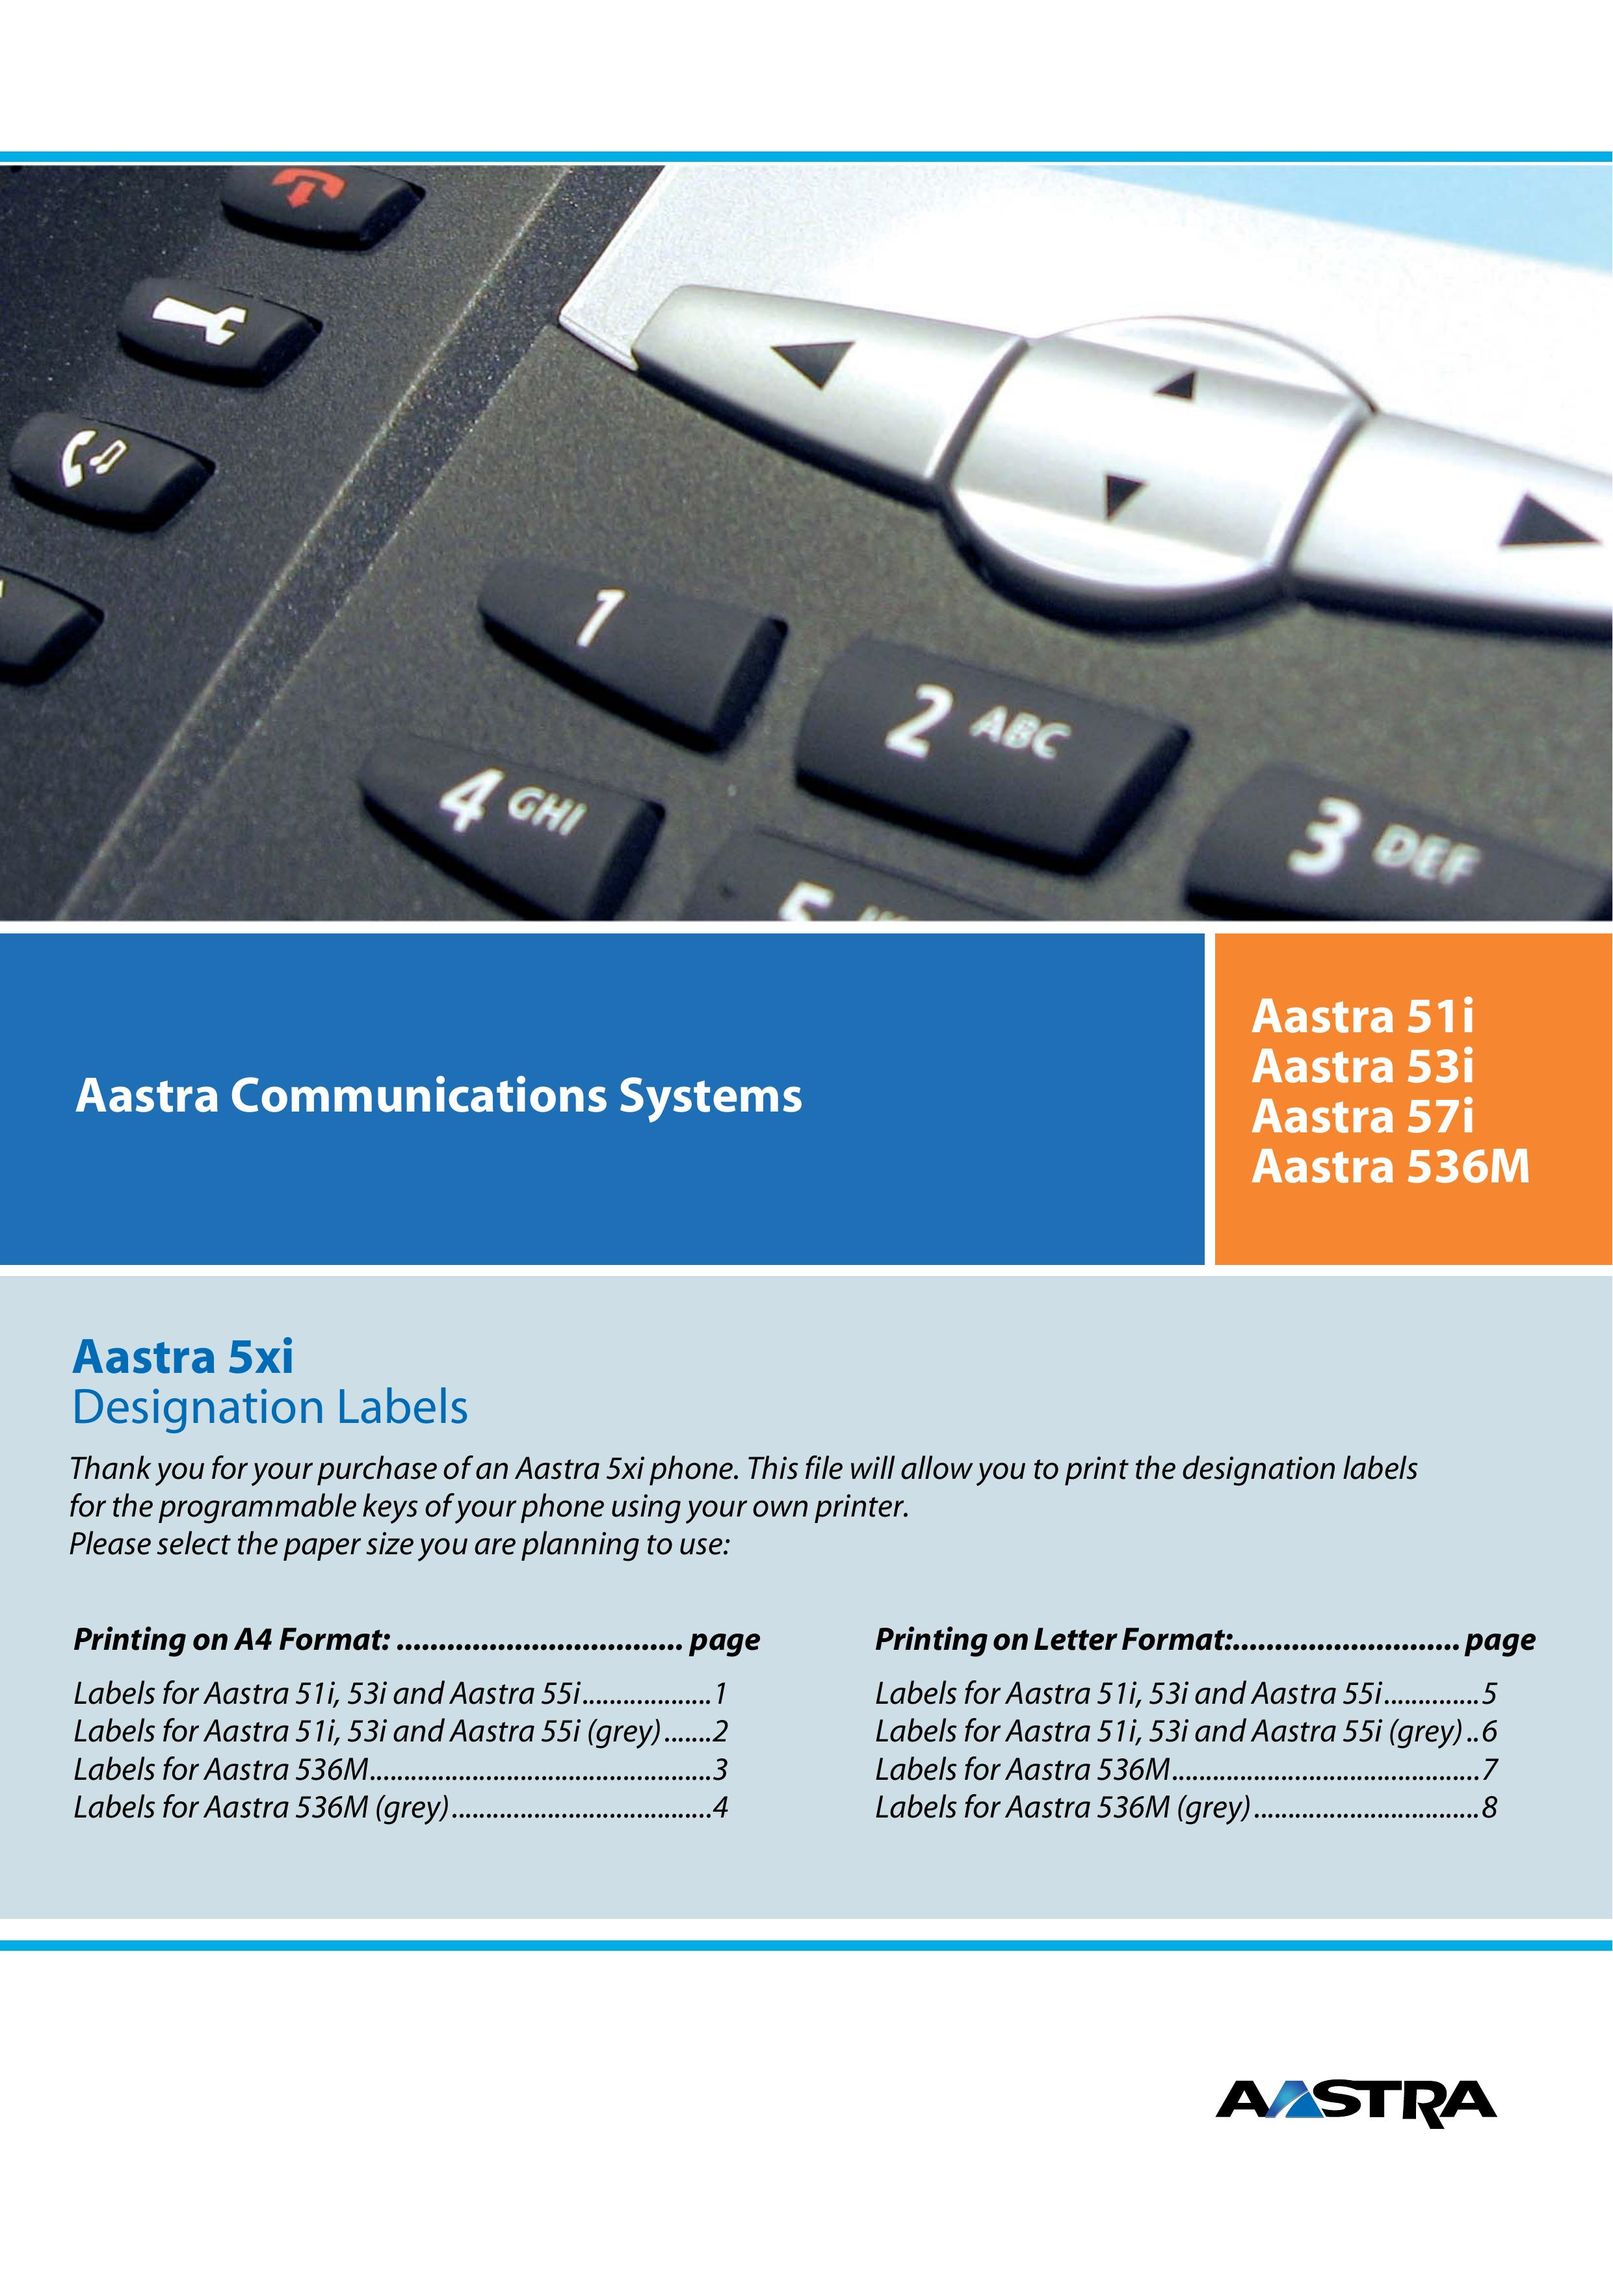 Aastra Telecom 536M Telephone User Manual